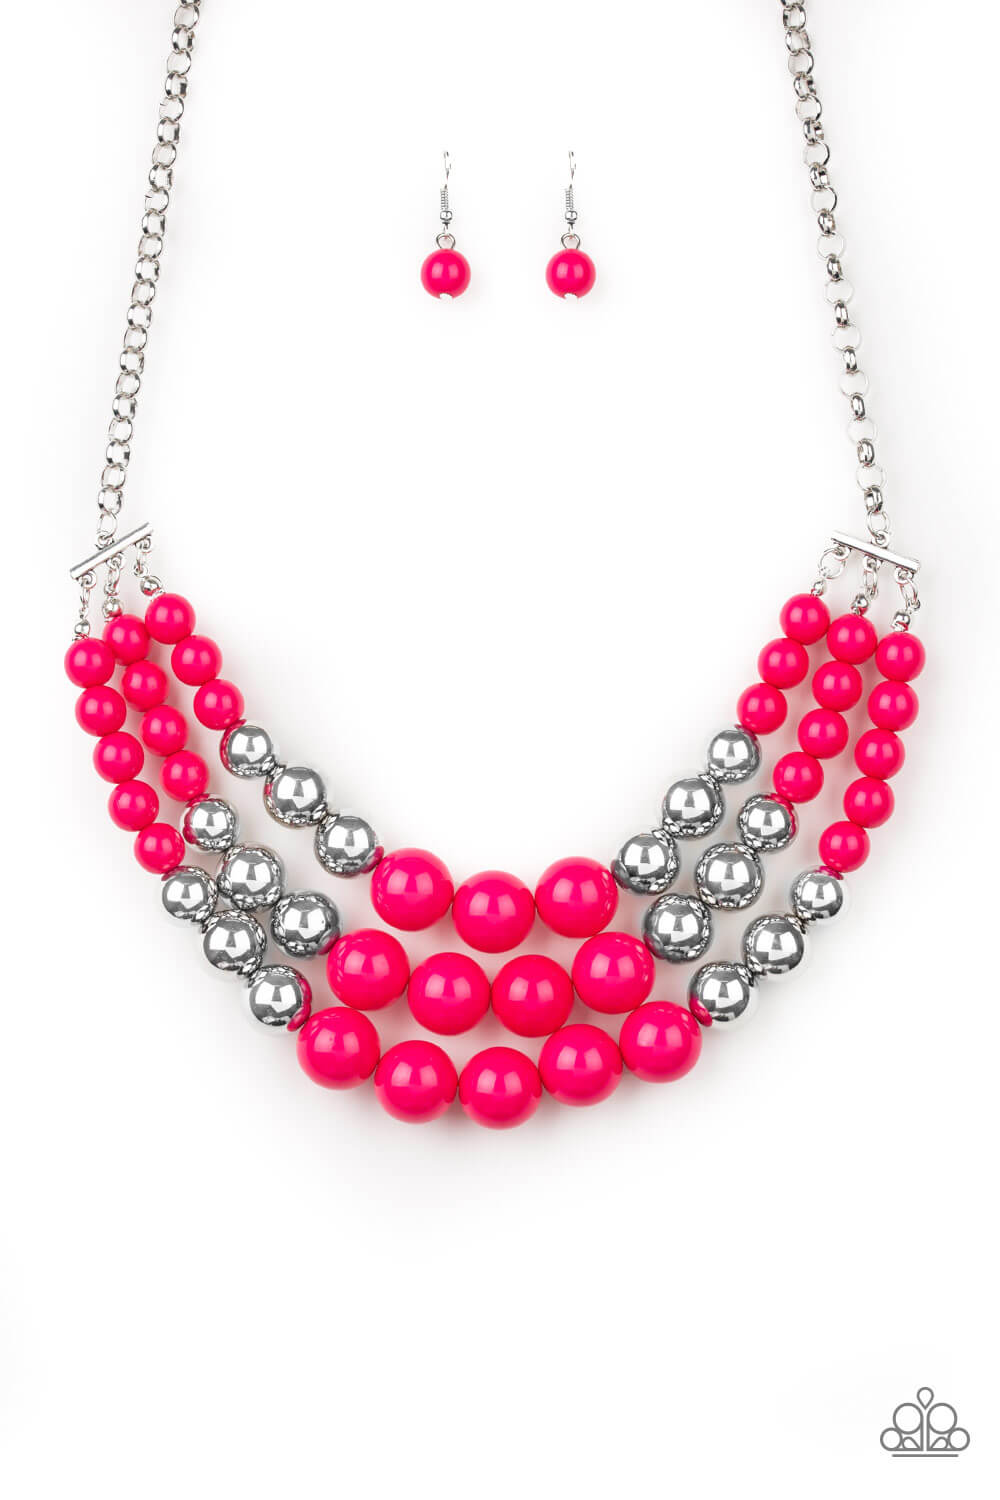 Dream Pop - Pink & Silver Necklace Set - Princess Glam Shop